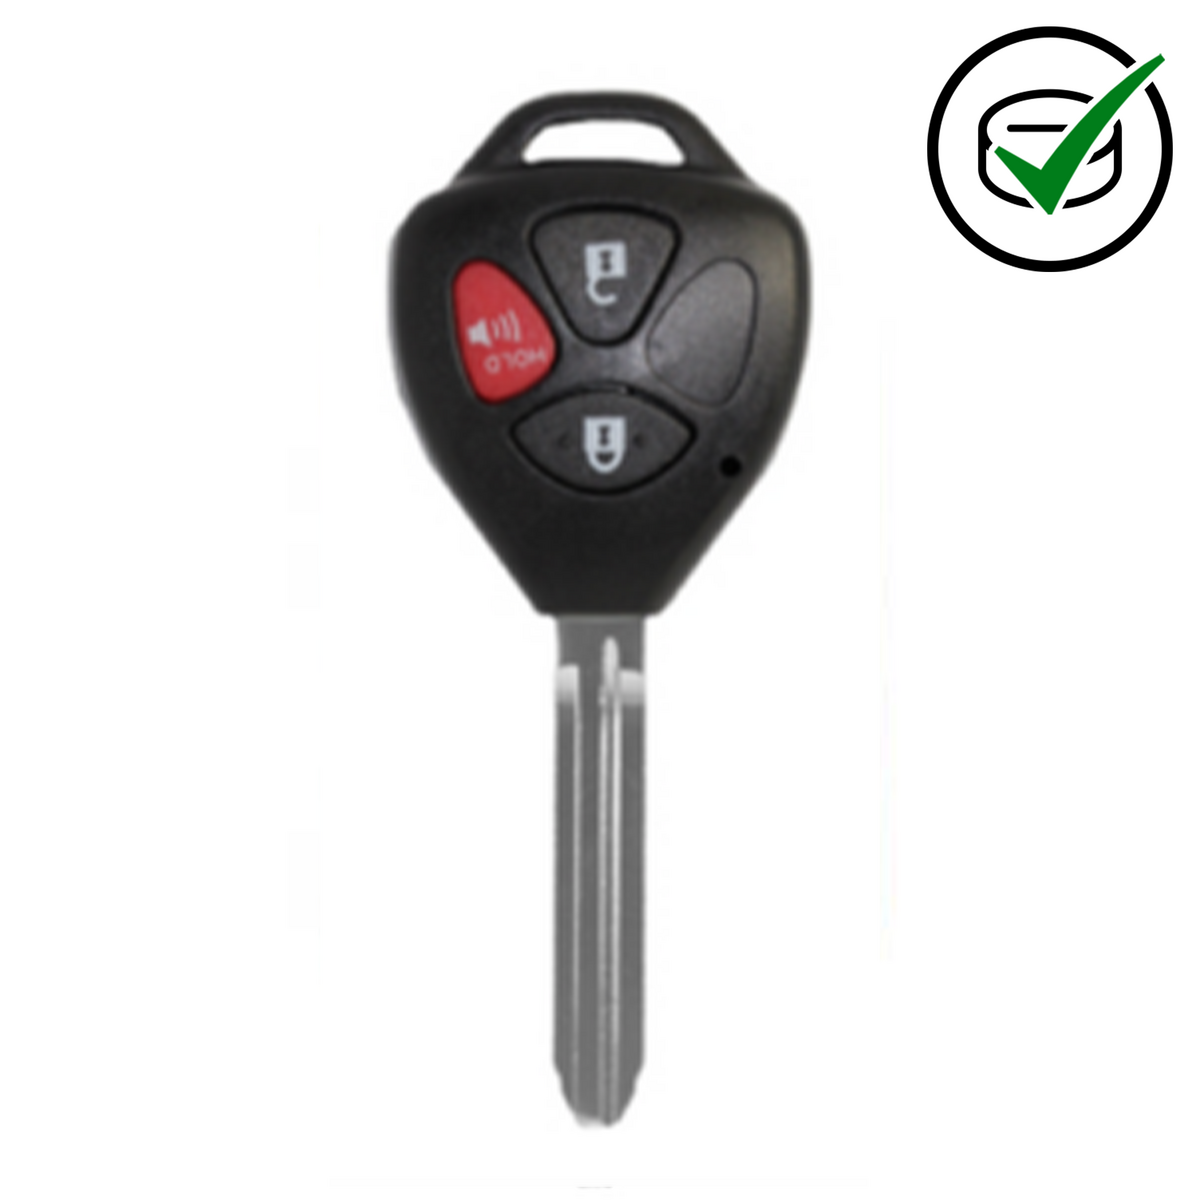 Key tool Toyota 3 button style remote